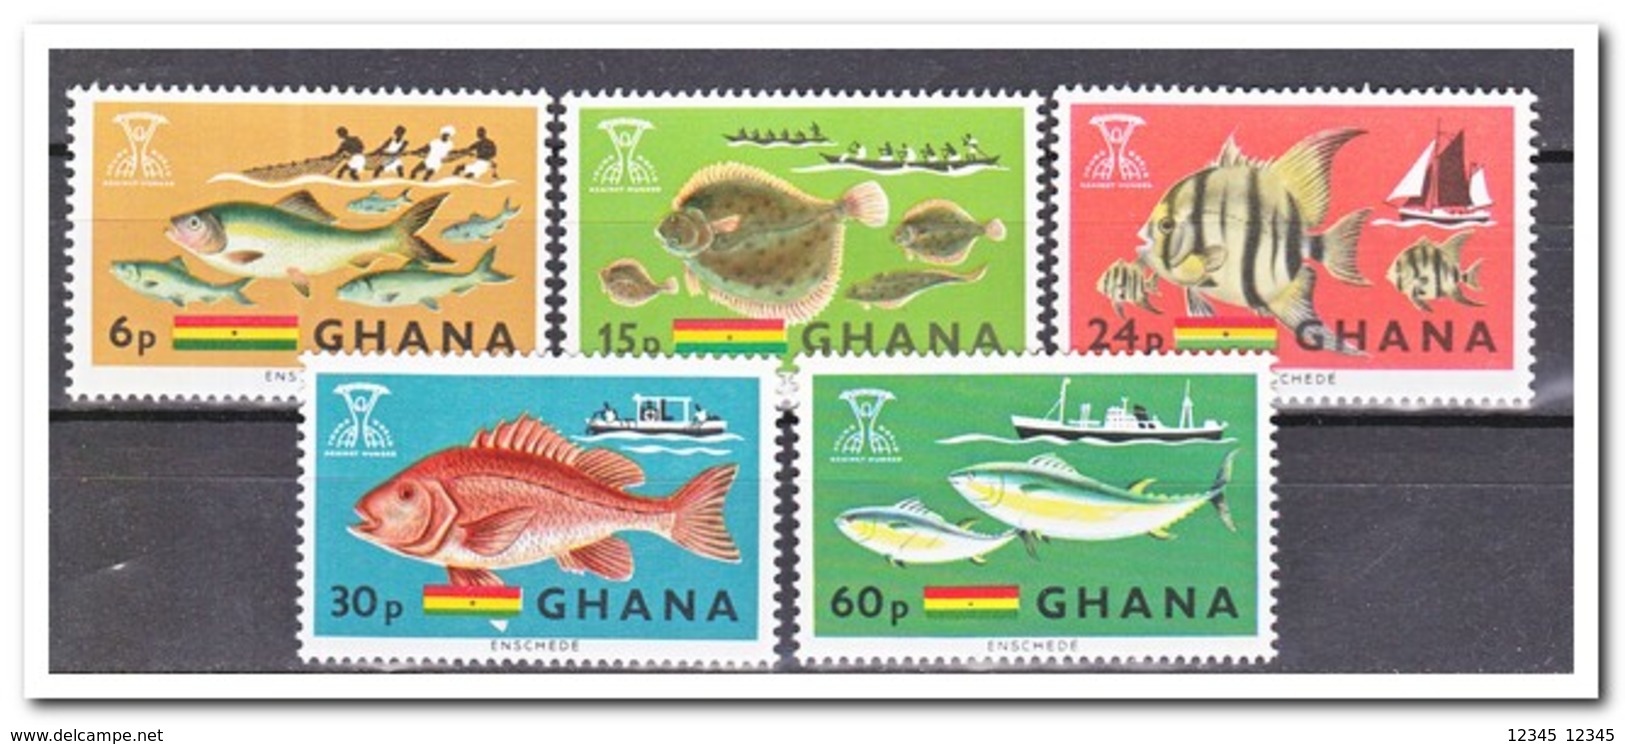 Ghana 1966, Postfris MNH, Fight Against Hunger, Fish - Ghana (1957-...)